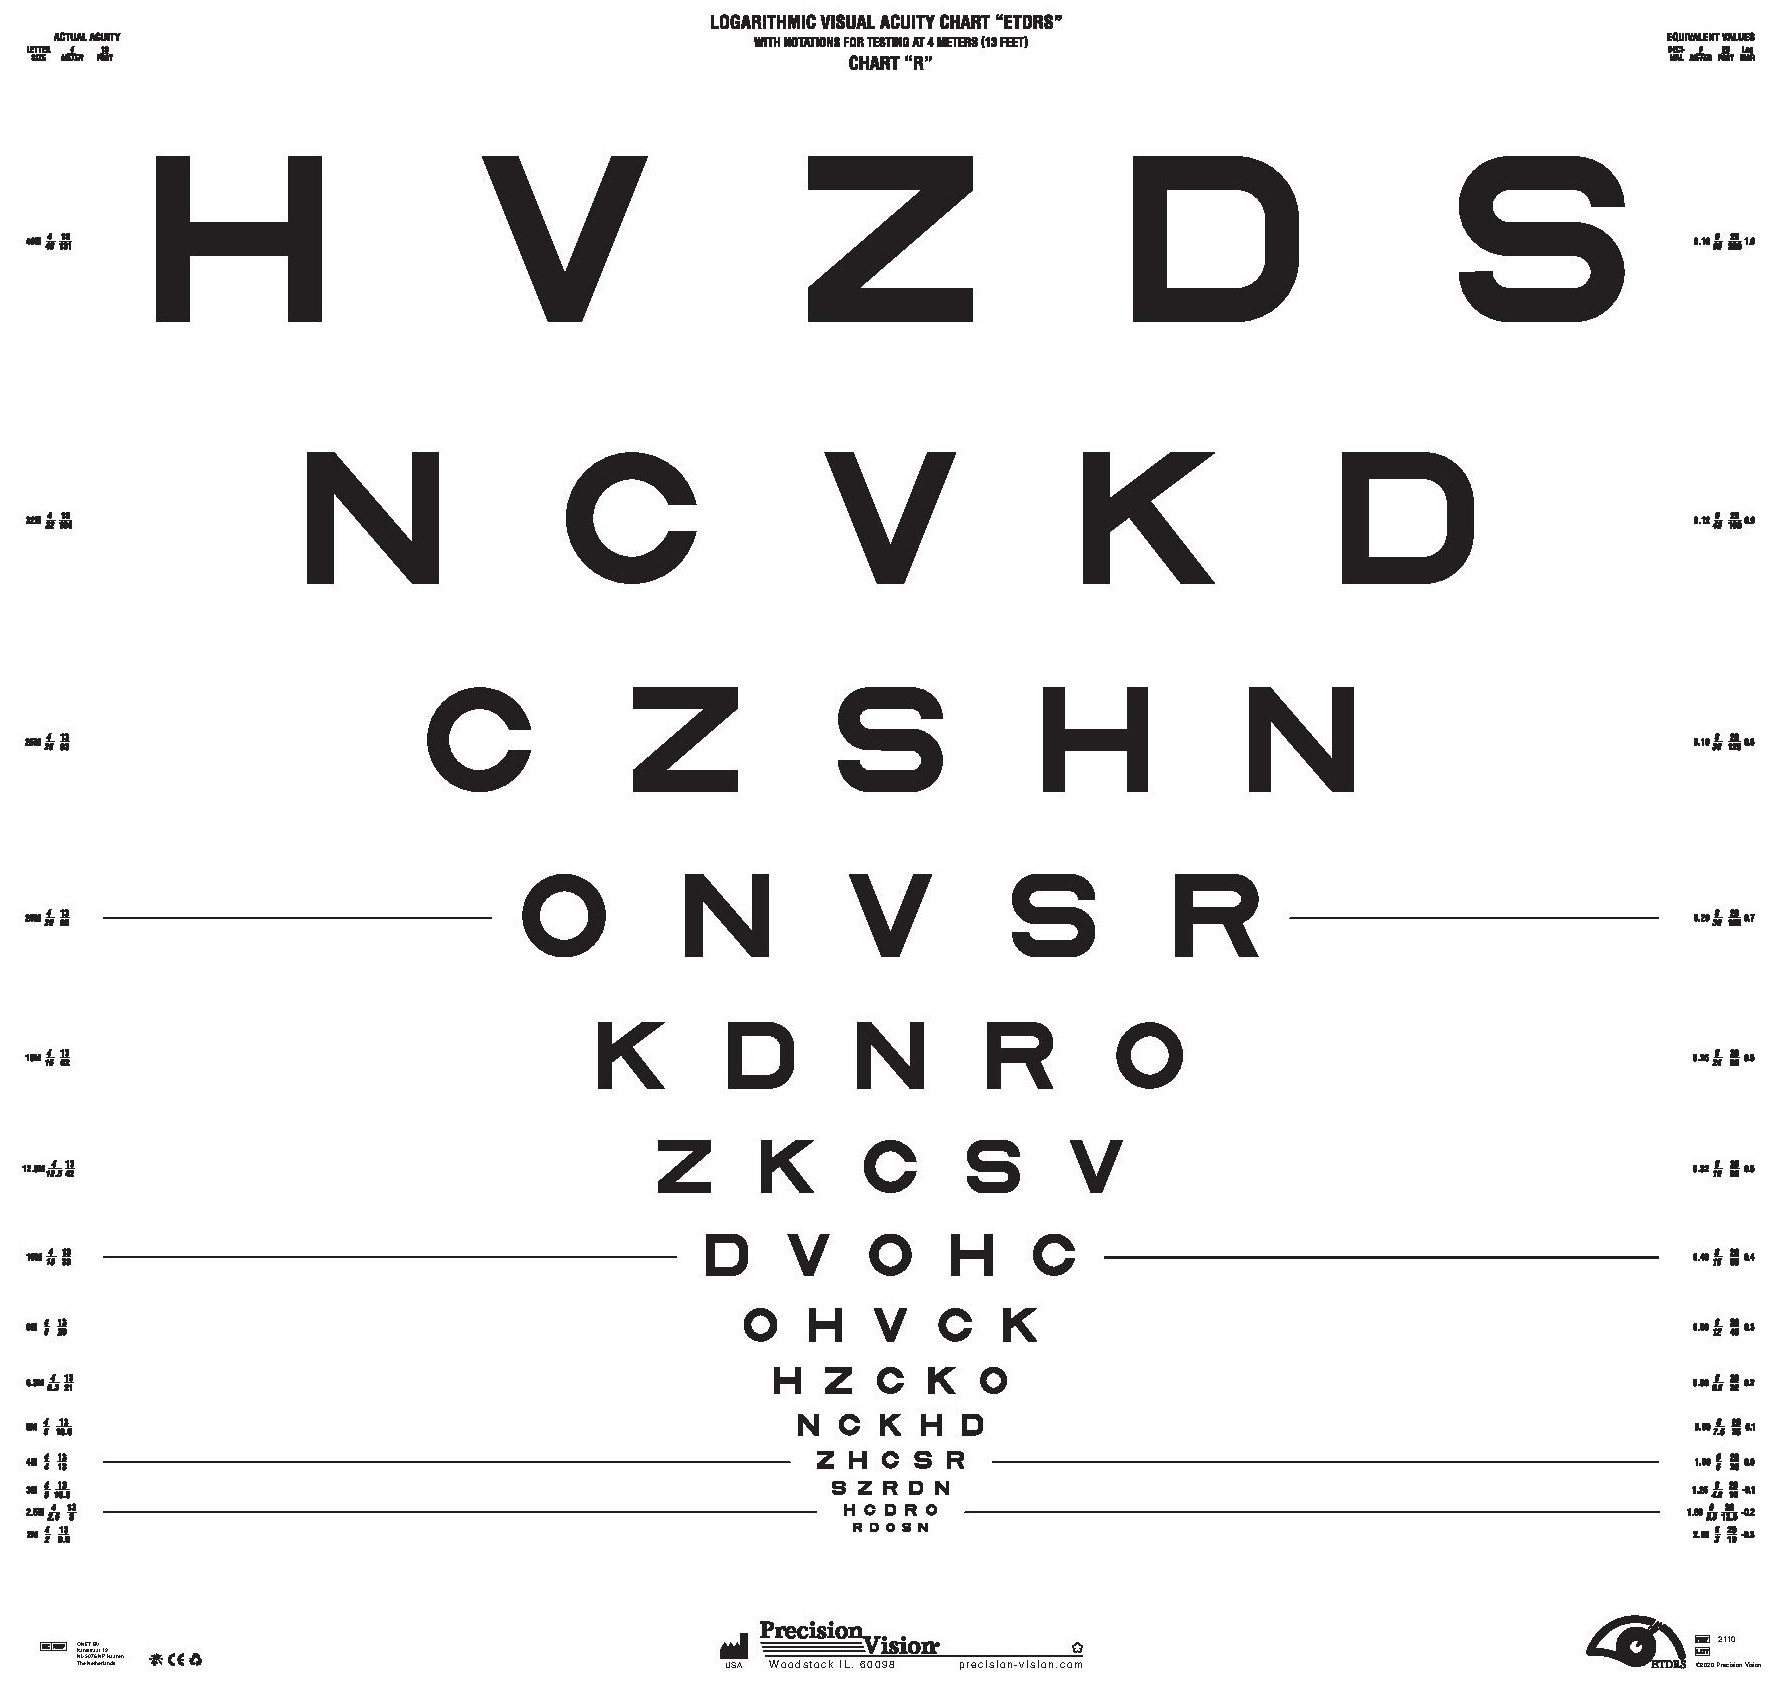 Snellen Eye Test Charts Interpretation - Precision Vision